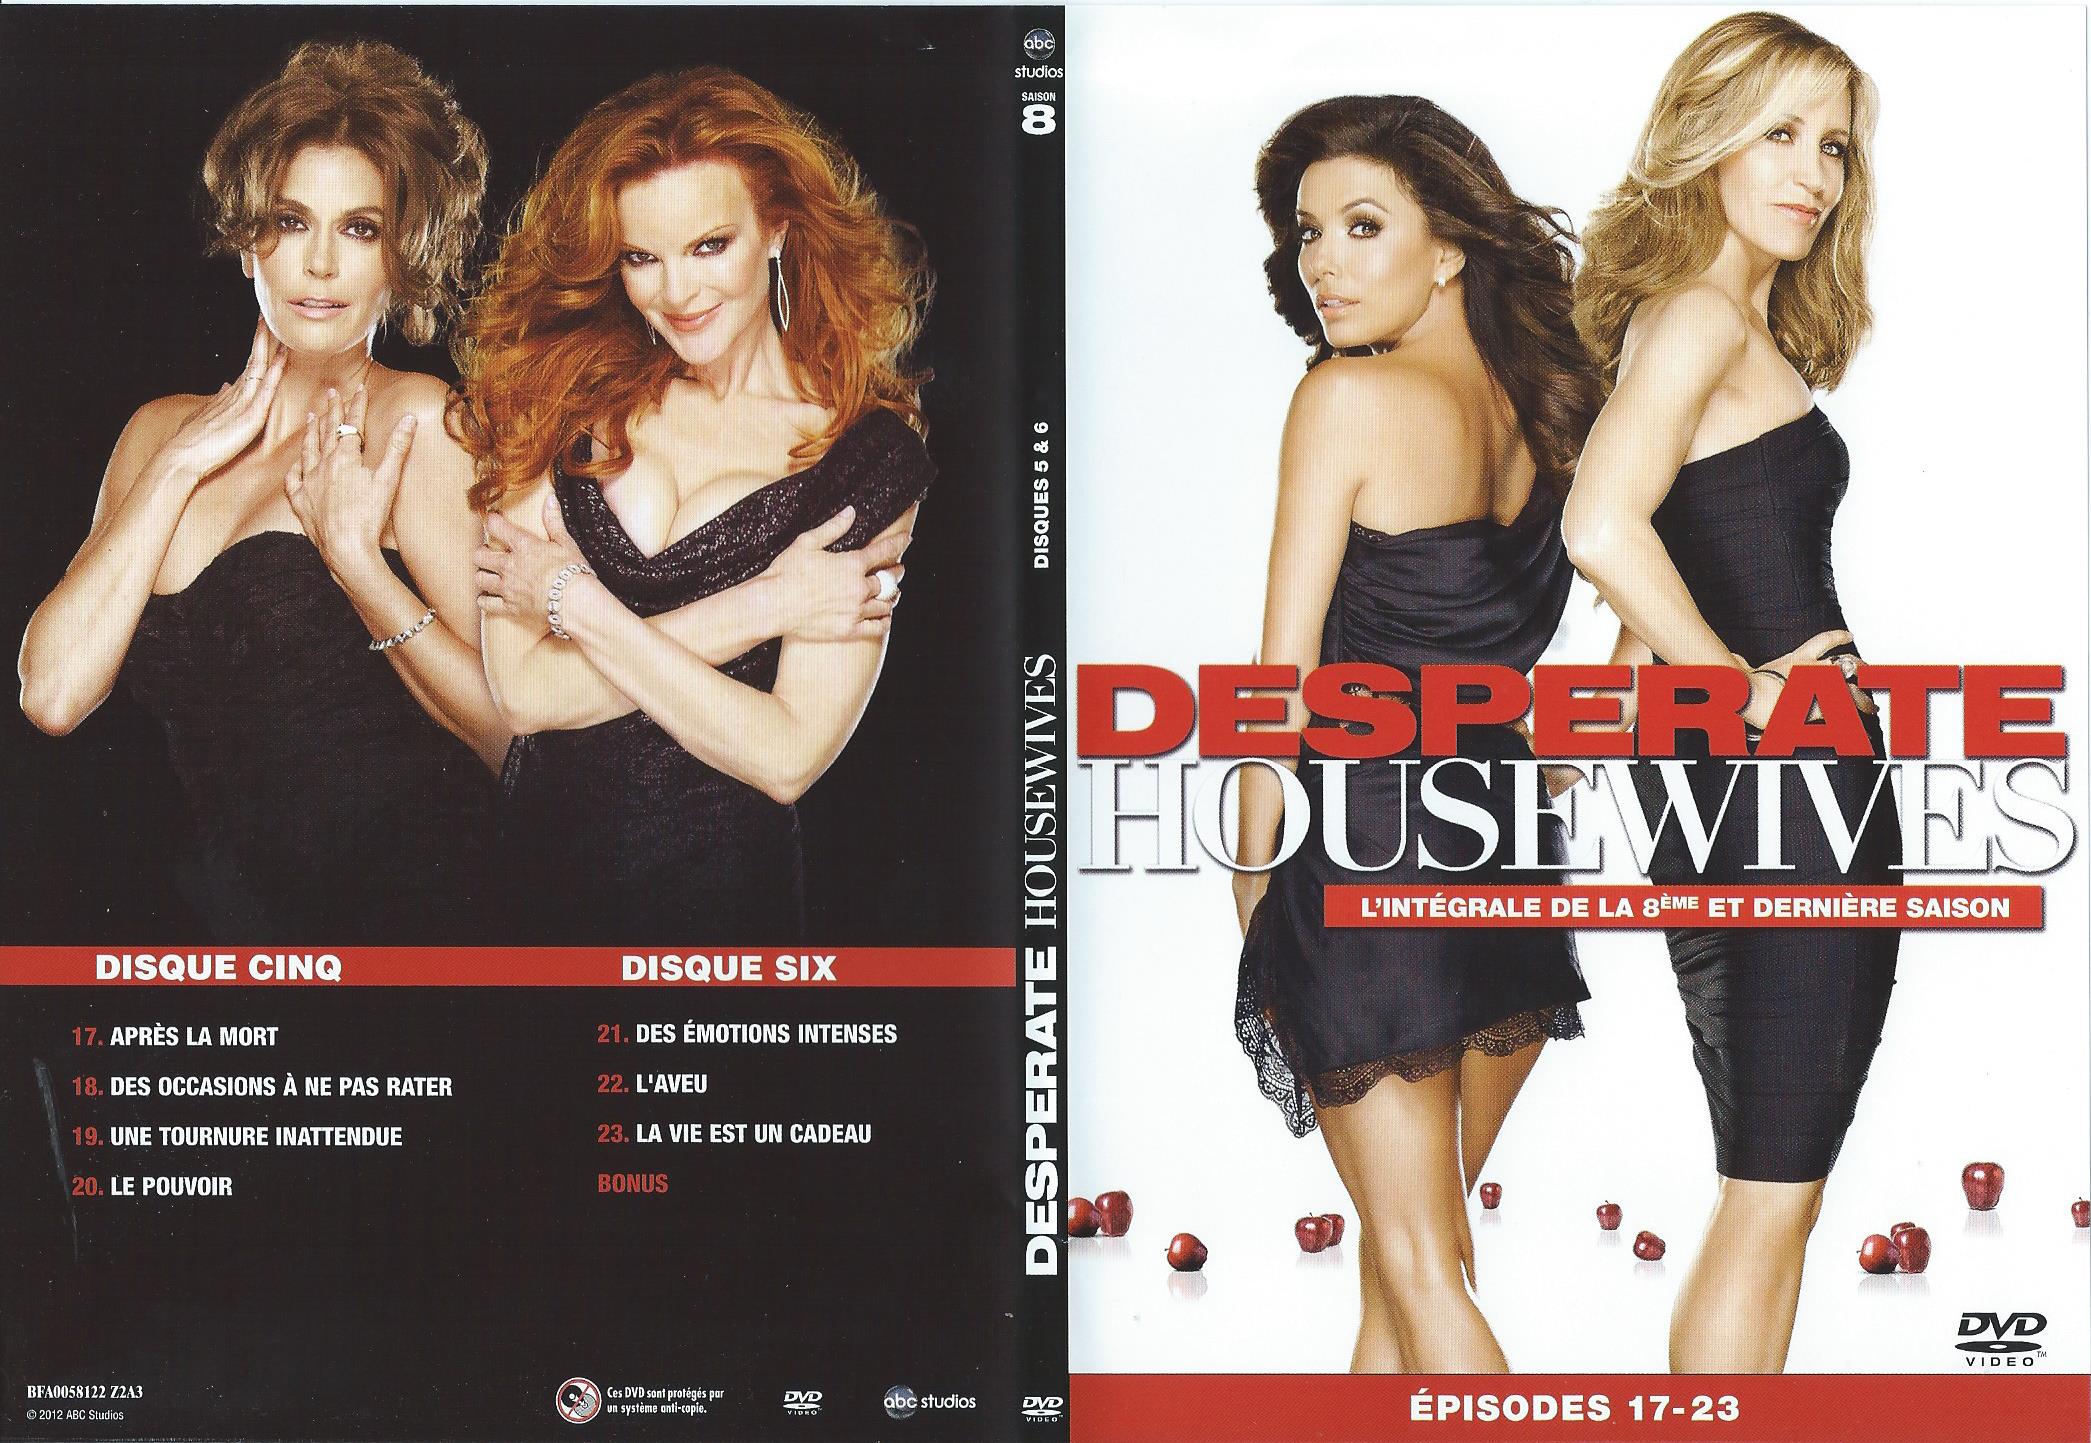 Jaquette DVD Desperate Housewives Saison 8 DVD 3